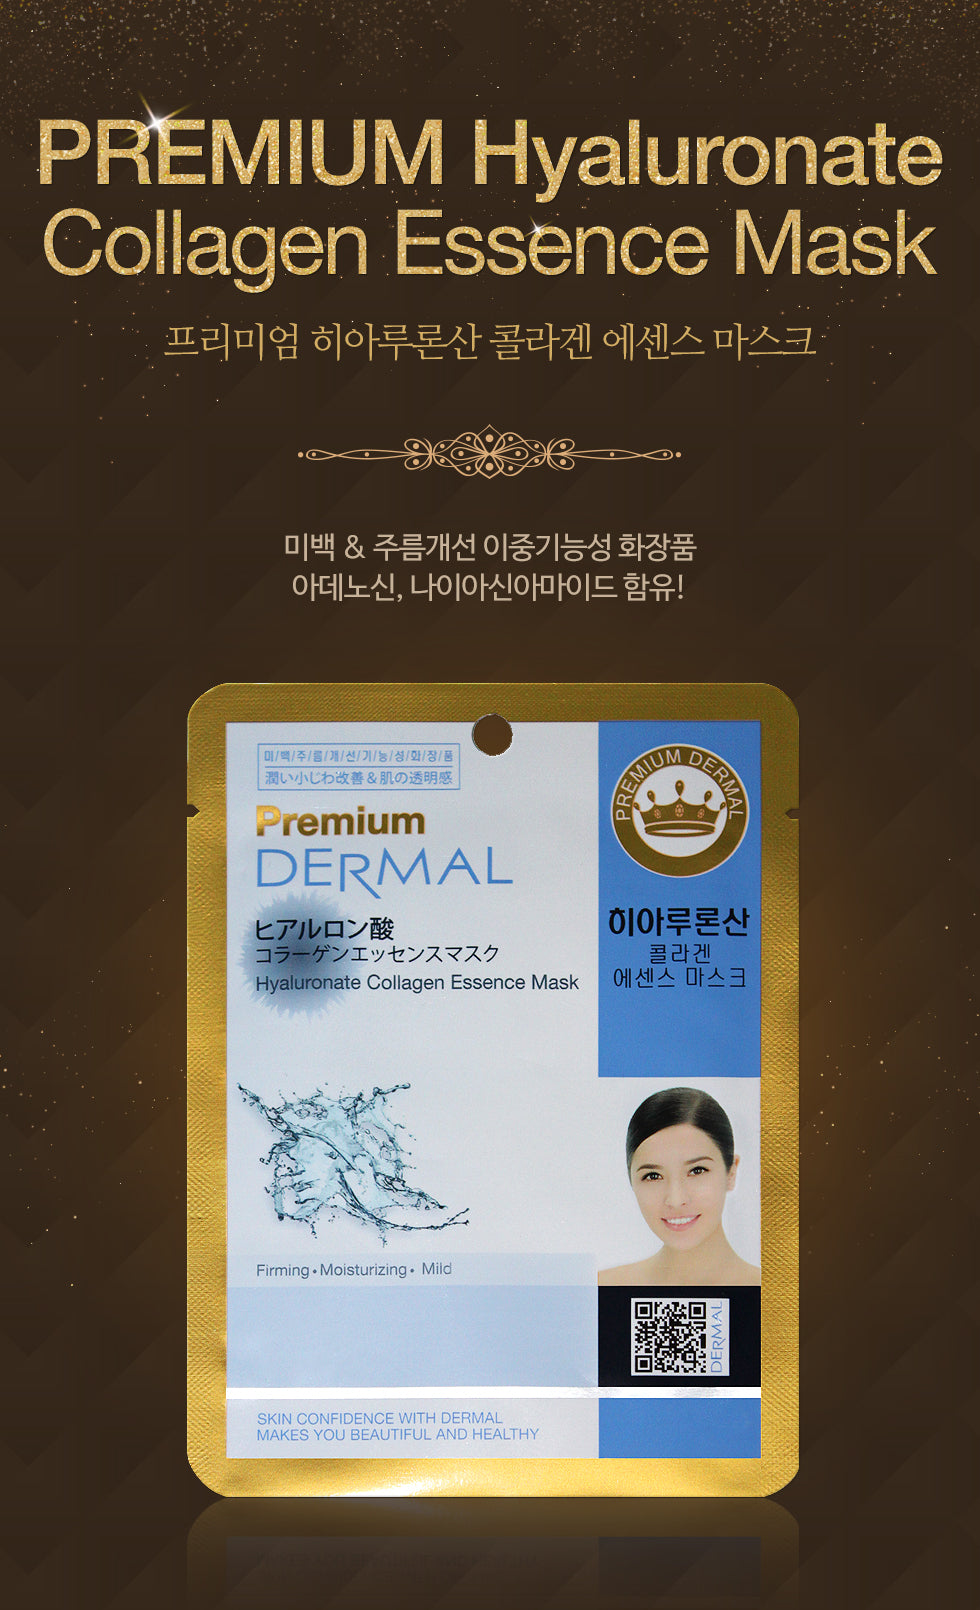 DERMAL Premium Hyaluronate Collagen Essence Mask 10 Pieces - Dotrade Express. Trusted Korea Manufacturers. Find the best Korean Brands